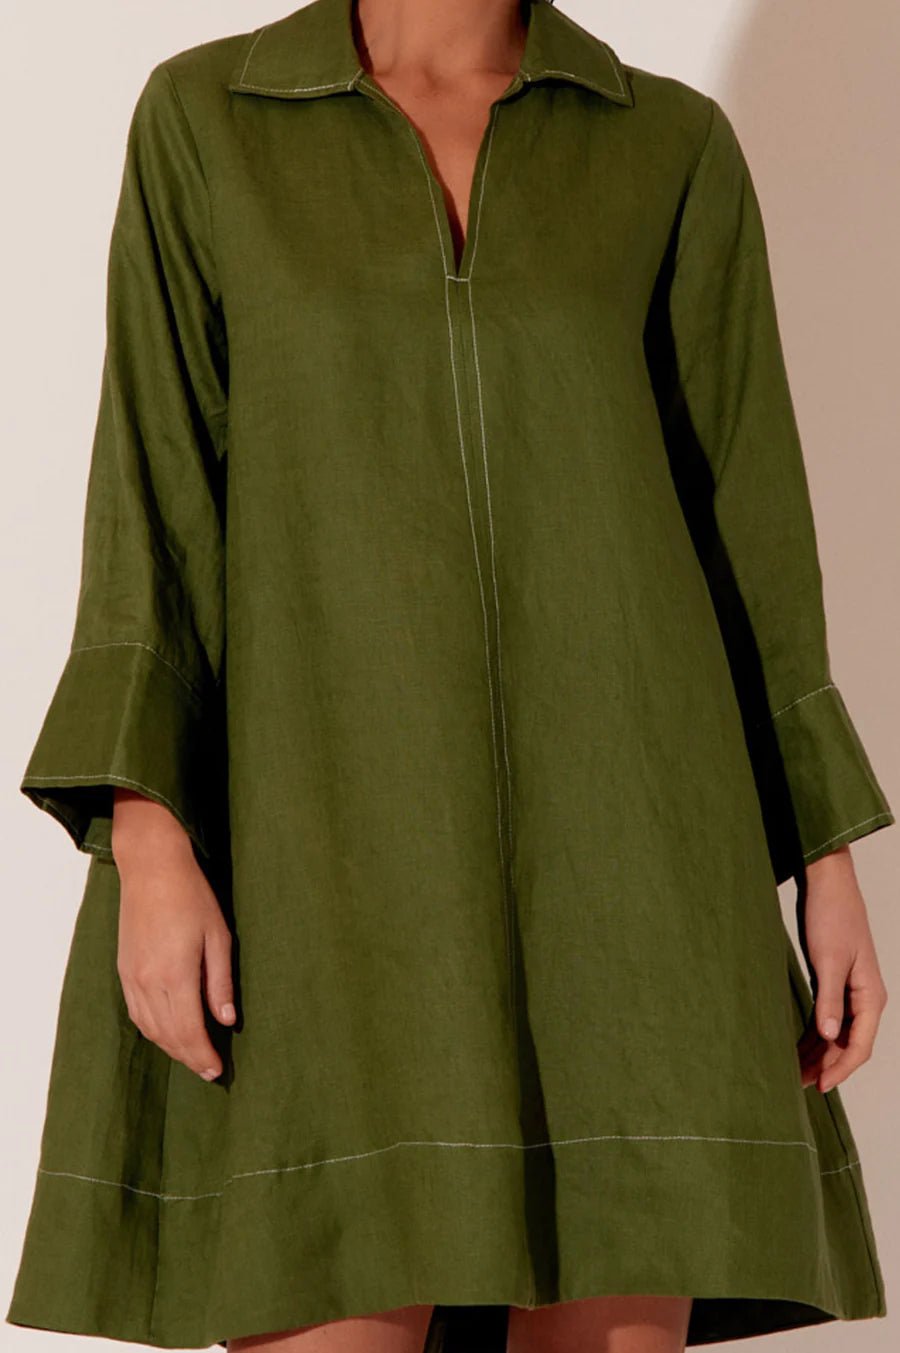 Solace Aline Linen Dress (Green) - Something For Me​​